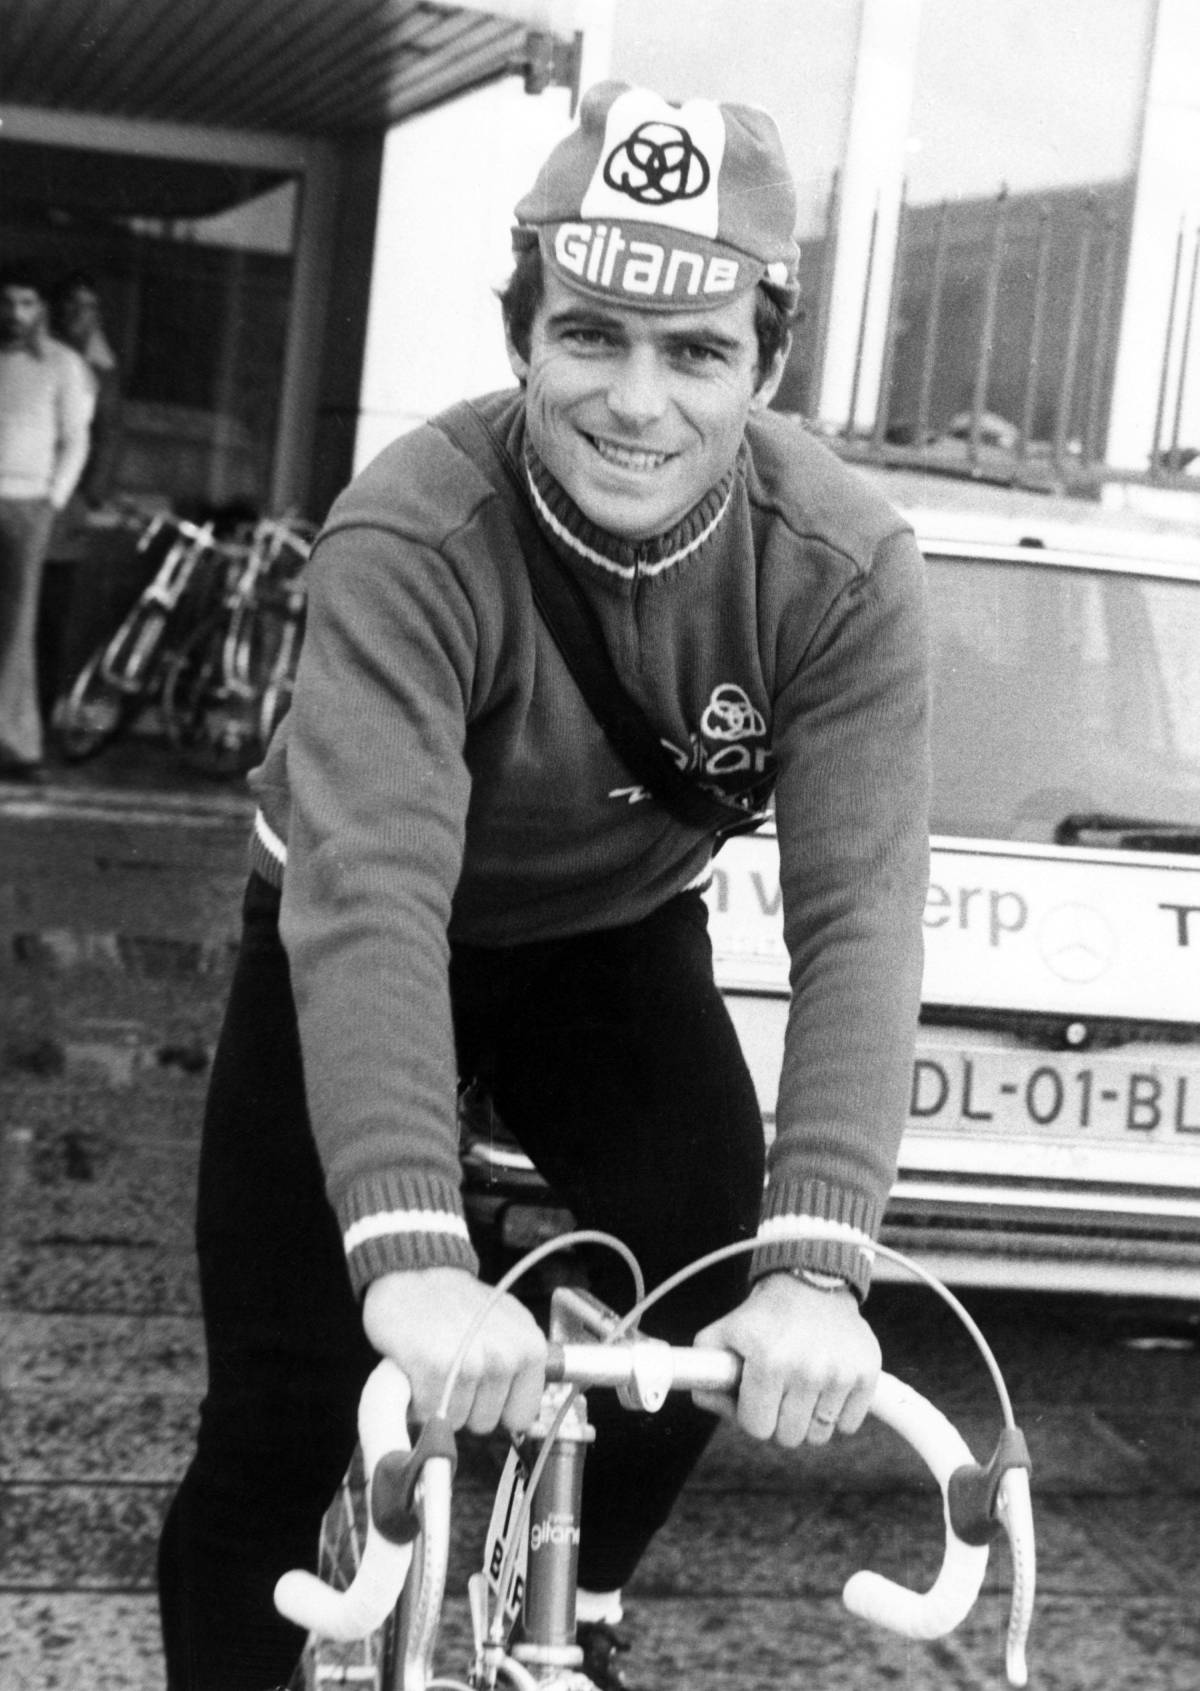  Bernard Hinault, ciclismo de antes (Foto: Cordon Press)